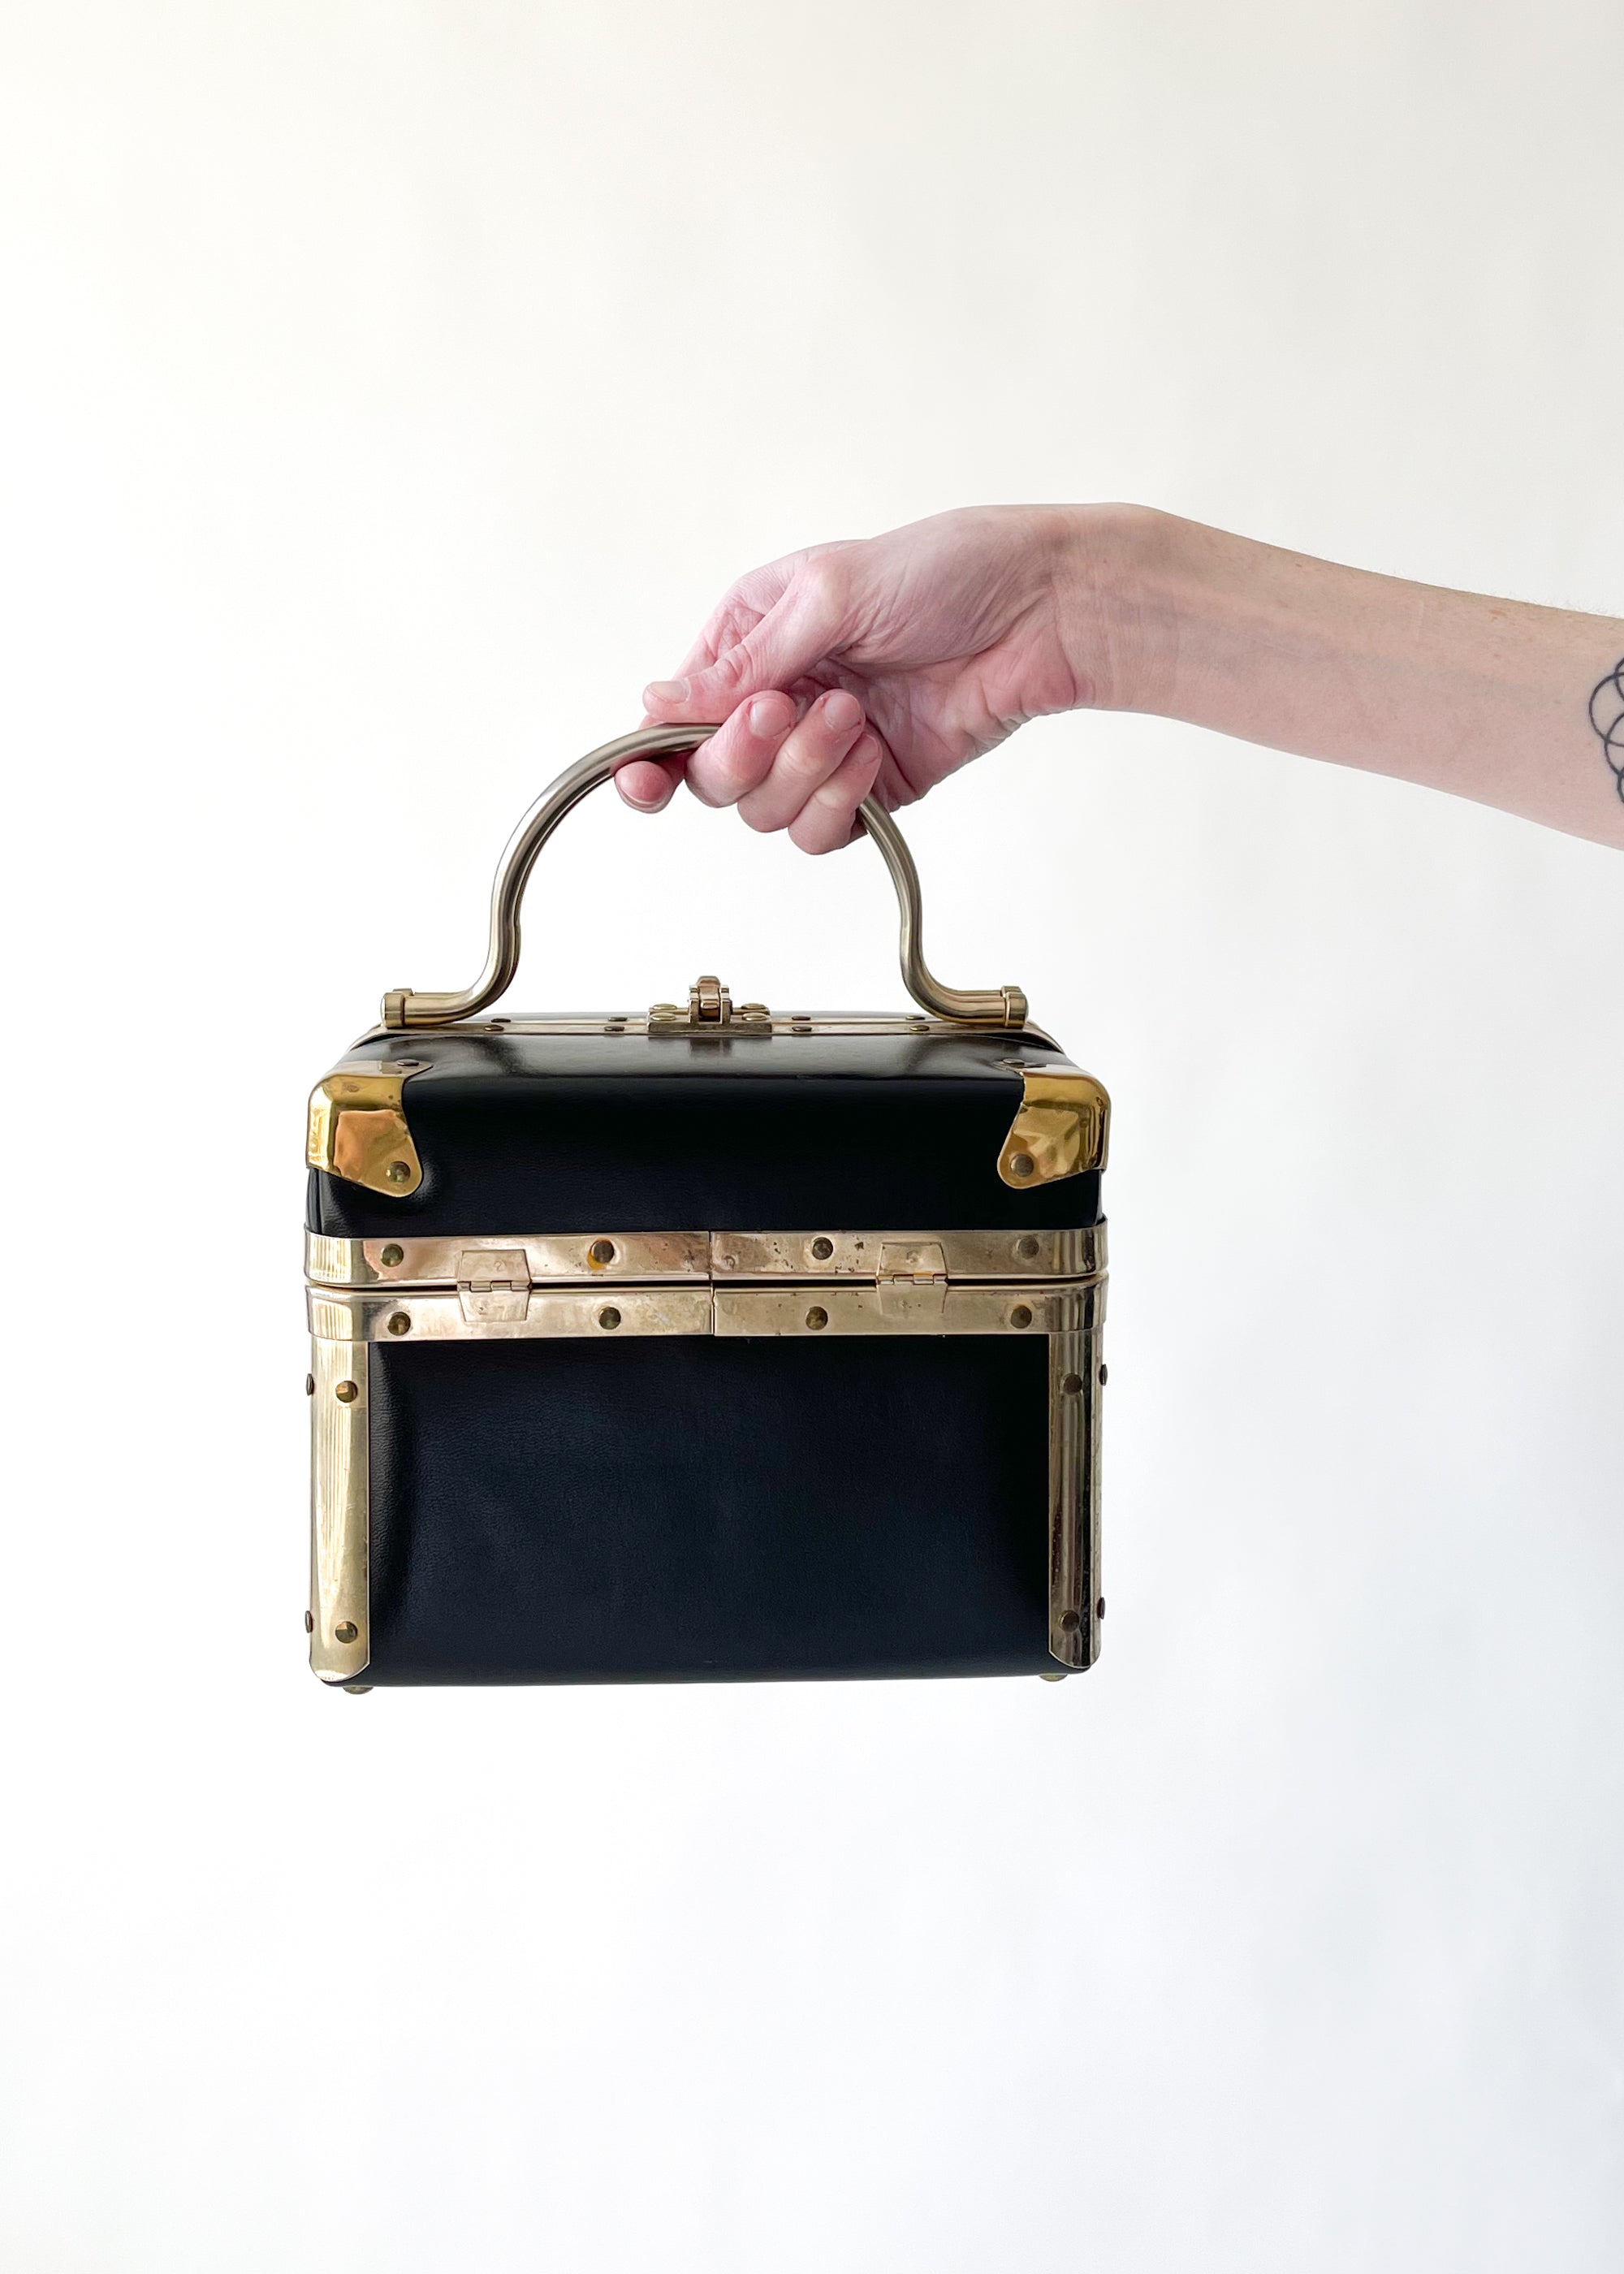 Lisa Frank Aliens Vintage box purse | eBay